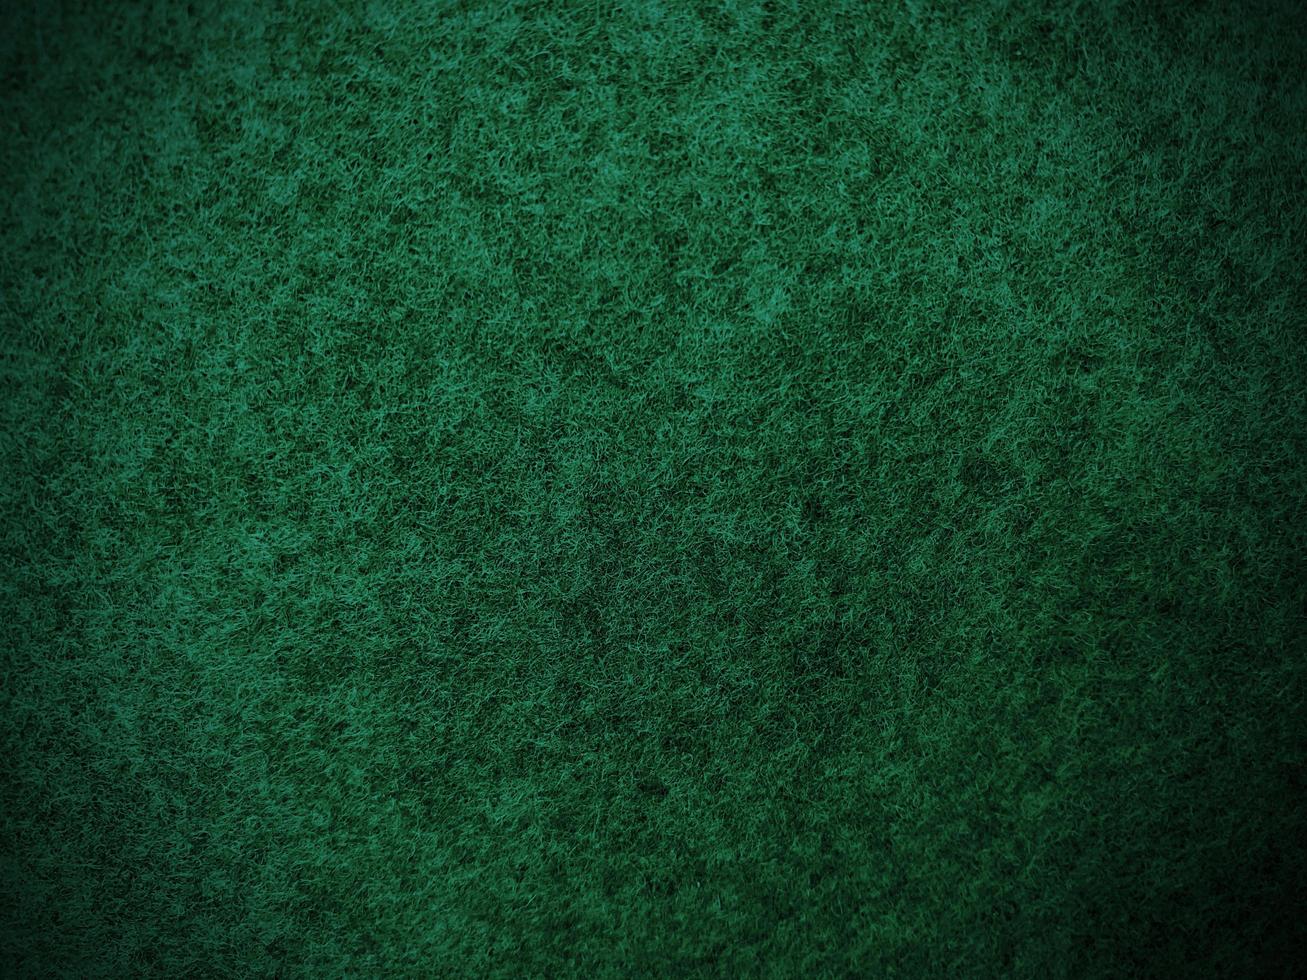 känt mörk grön mjuk grov textil- material bakgrund textur stänga upp, poker bordtennis boll, bord trasa. tömma grön tyg bakgrund. foto